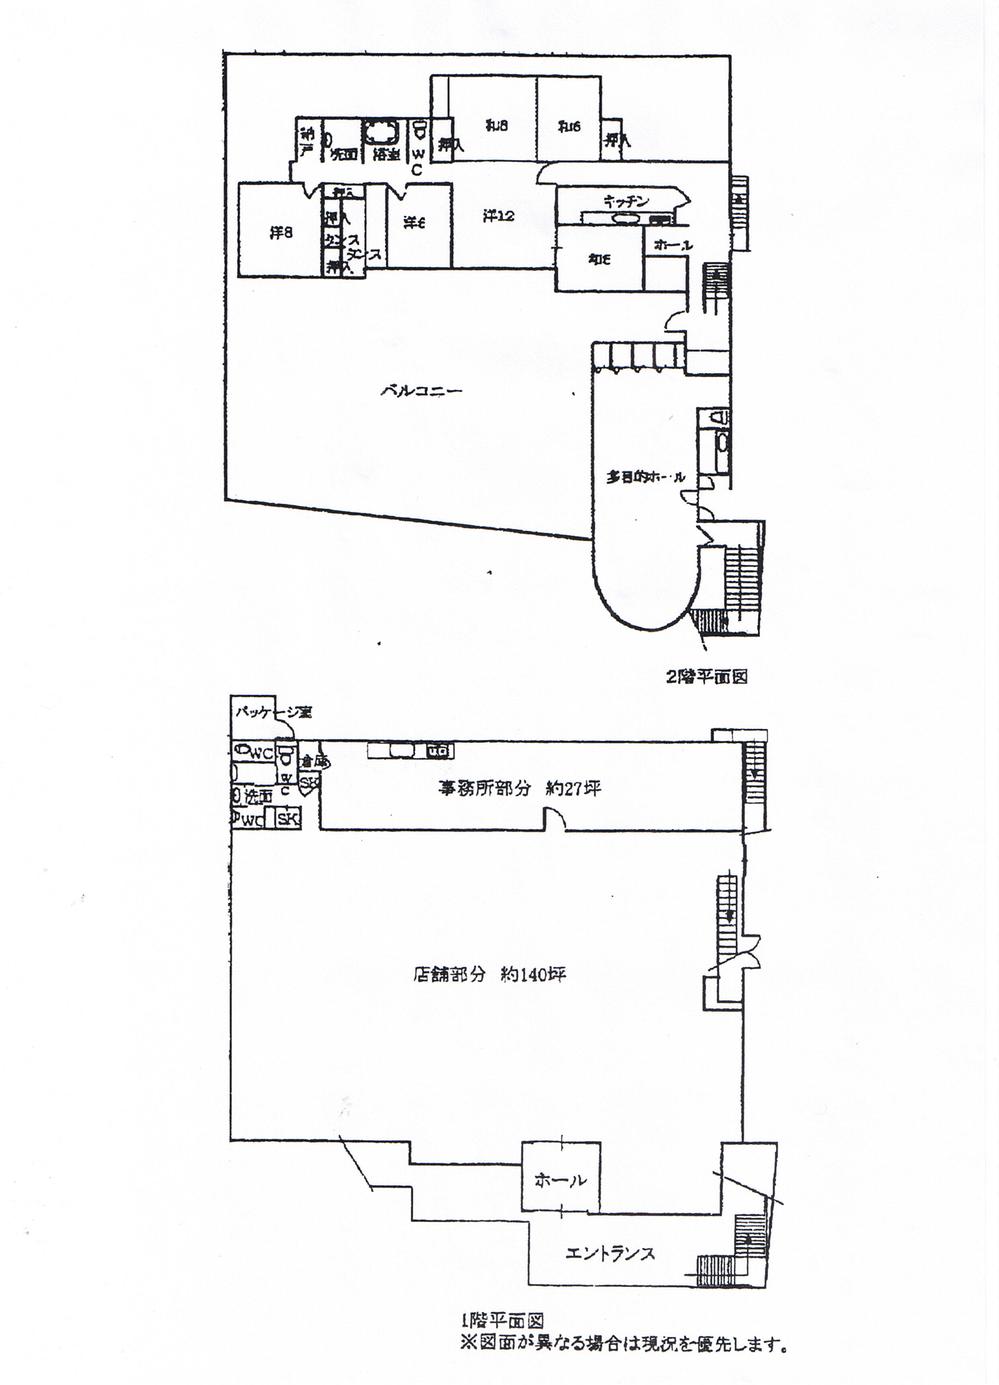 Floor plan. 49,900,000 yen, 4LDK, Land area 997 sq m , Building area 851.59 sq m